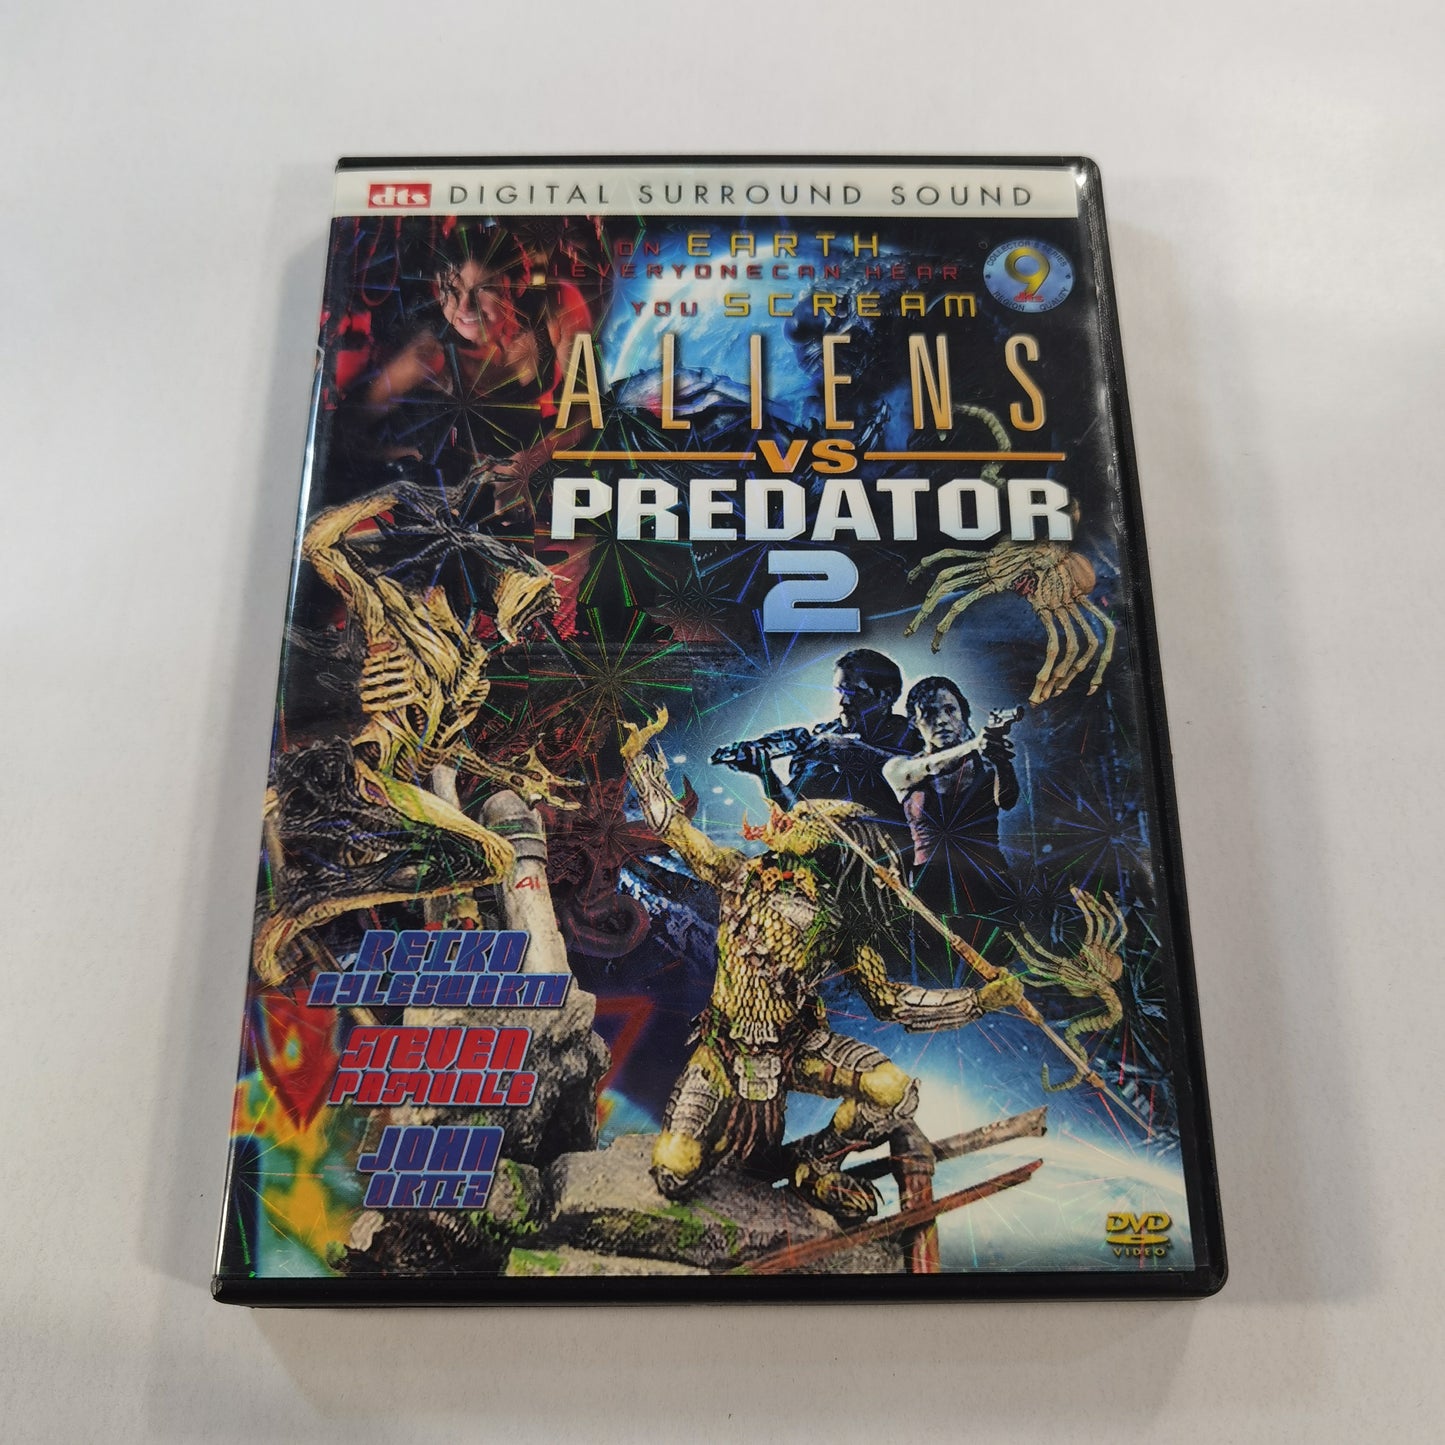 Alien vs. Predator: Requiem (2007) ( Aliens vs Predator 2 ) - DVD